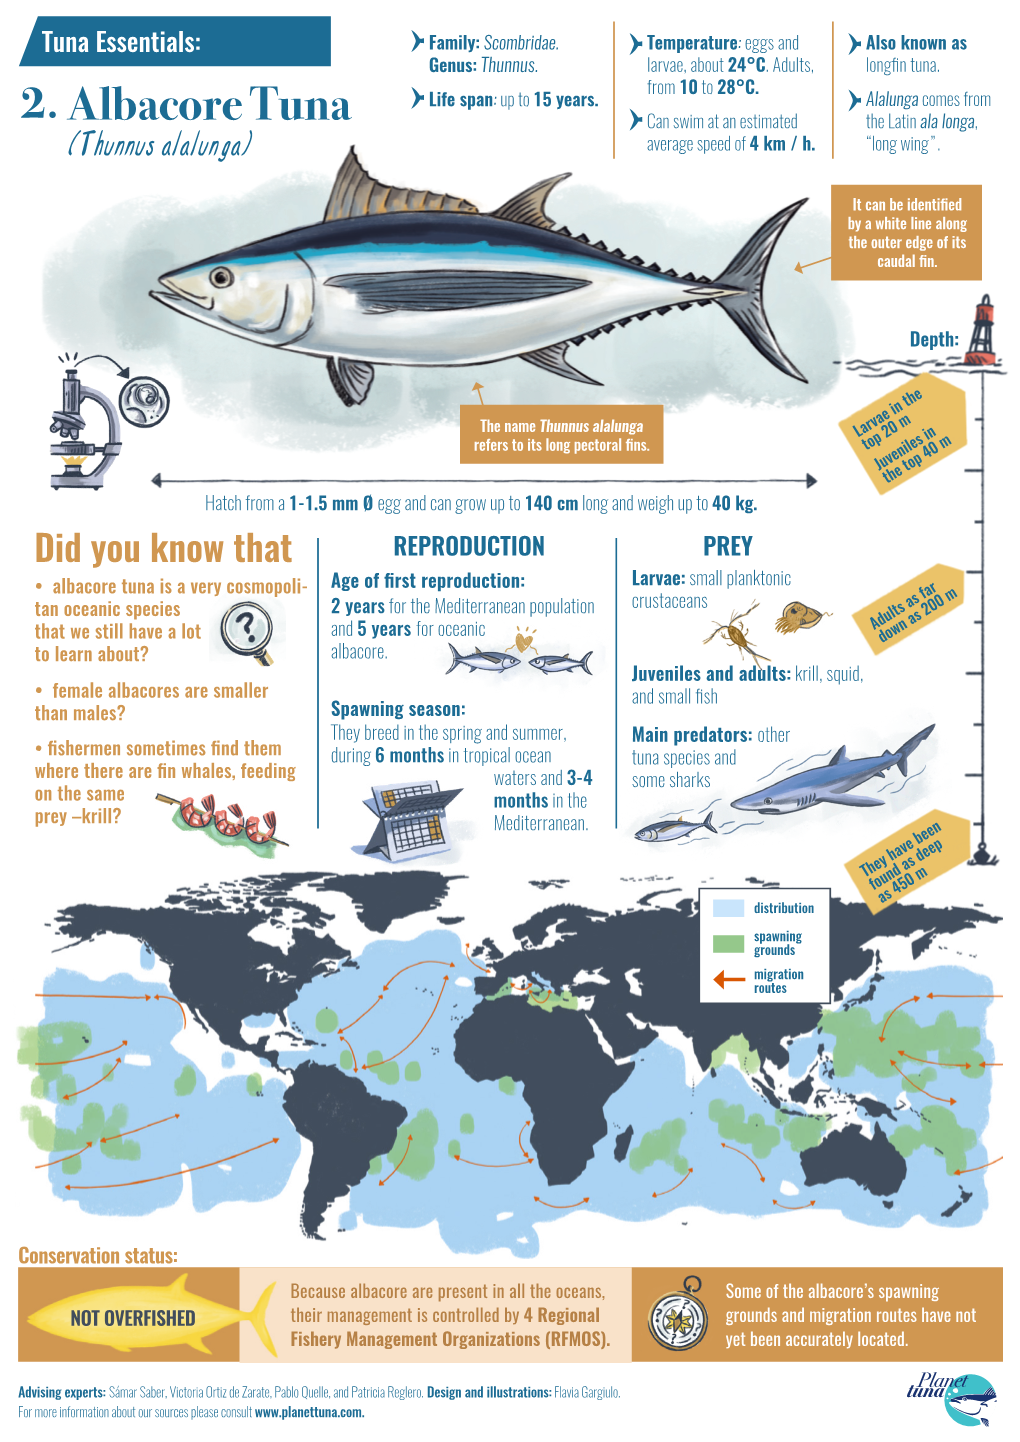 Albacore Tuna Can Swim at an Estimated the Latin Ala Longa, (Thunnus Alalunga) Average Speed of 4 Km / H